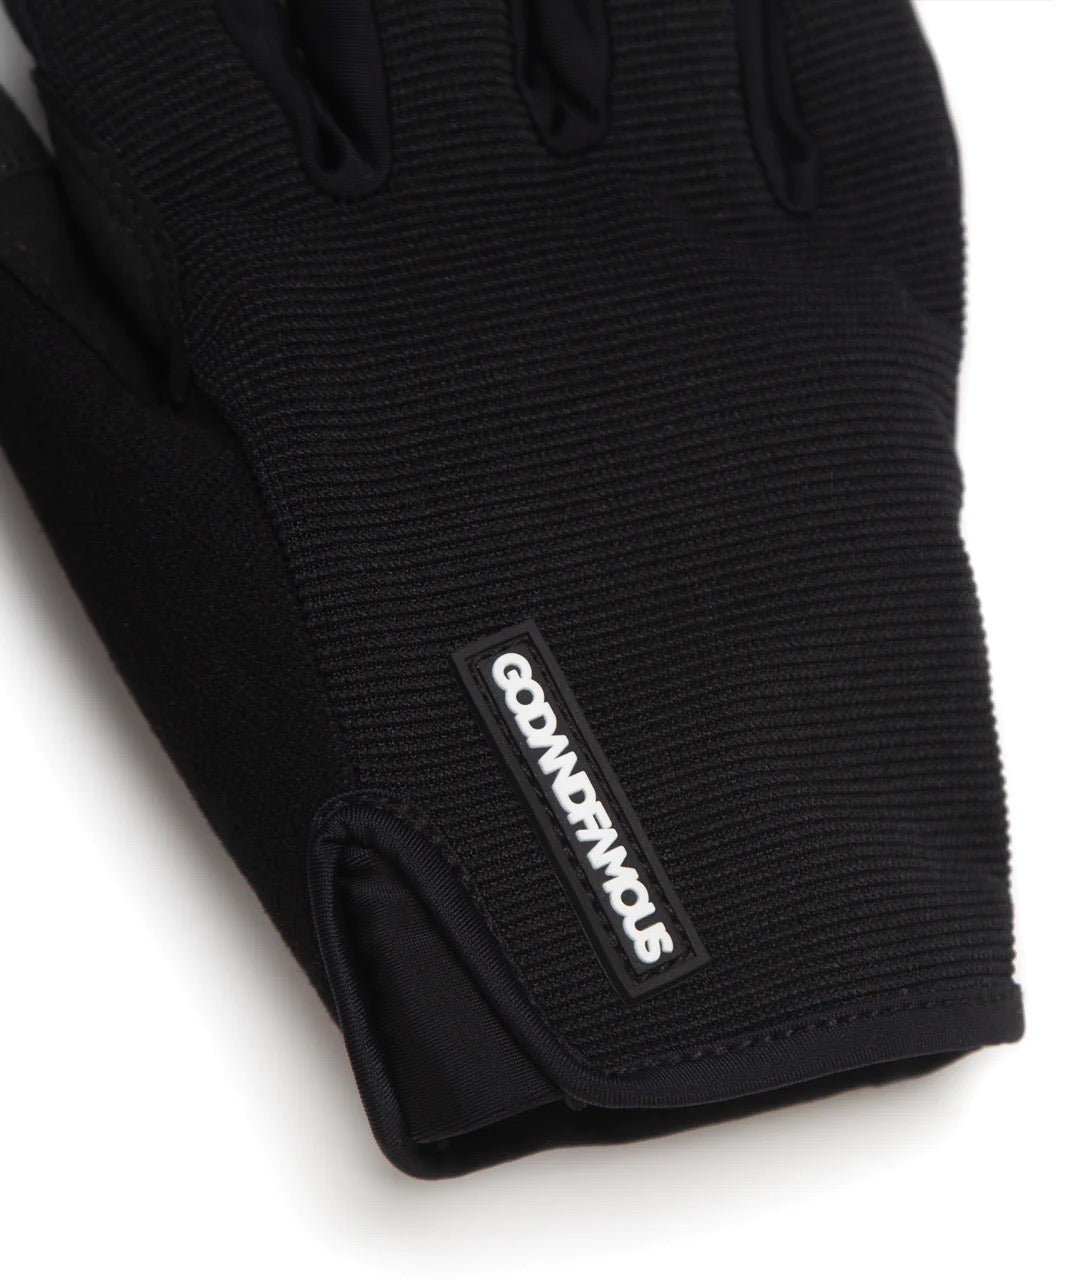 God & Famous LT Cycling Gloves - Black